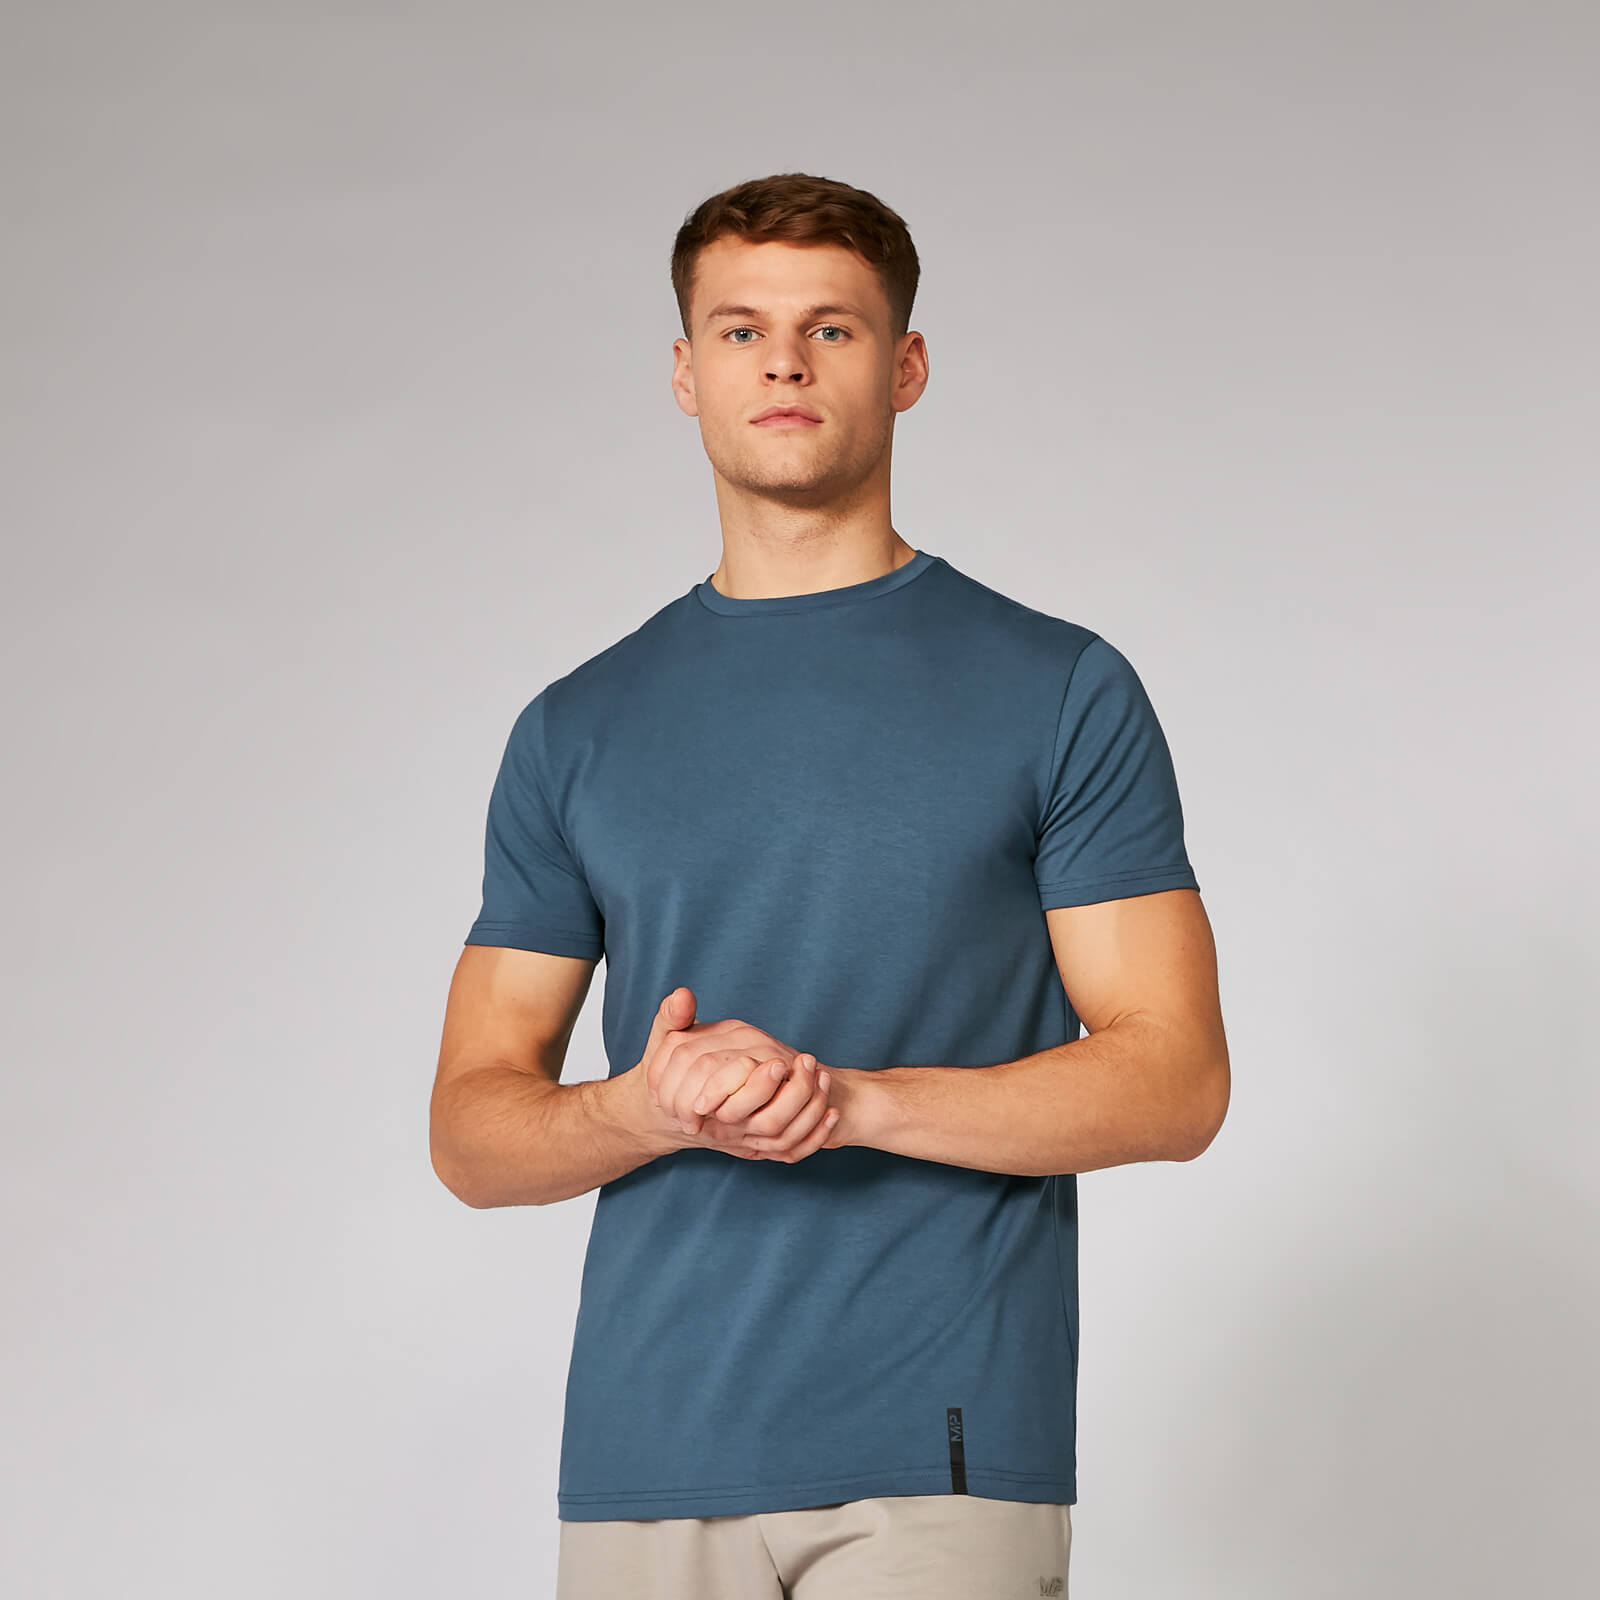 Luxe 極緻系列 男士經典圓領T恤 - 藍紫色